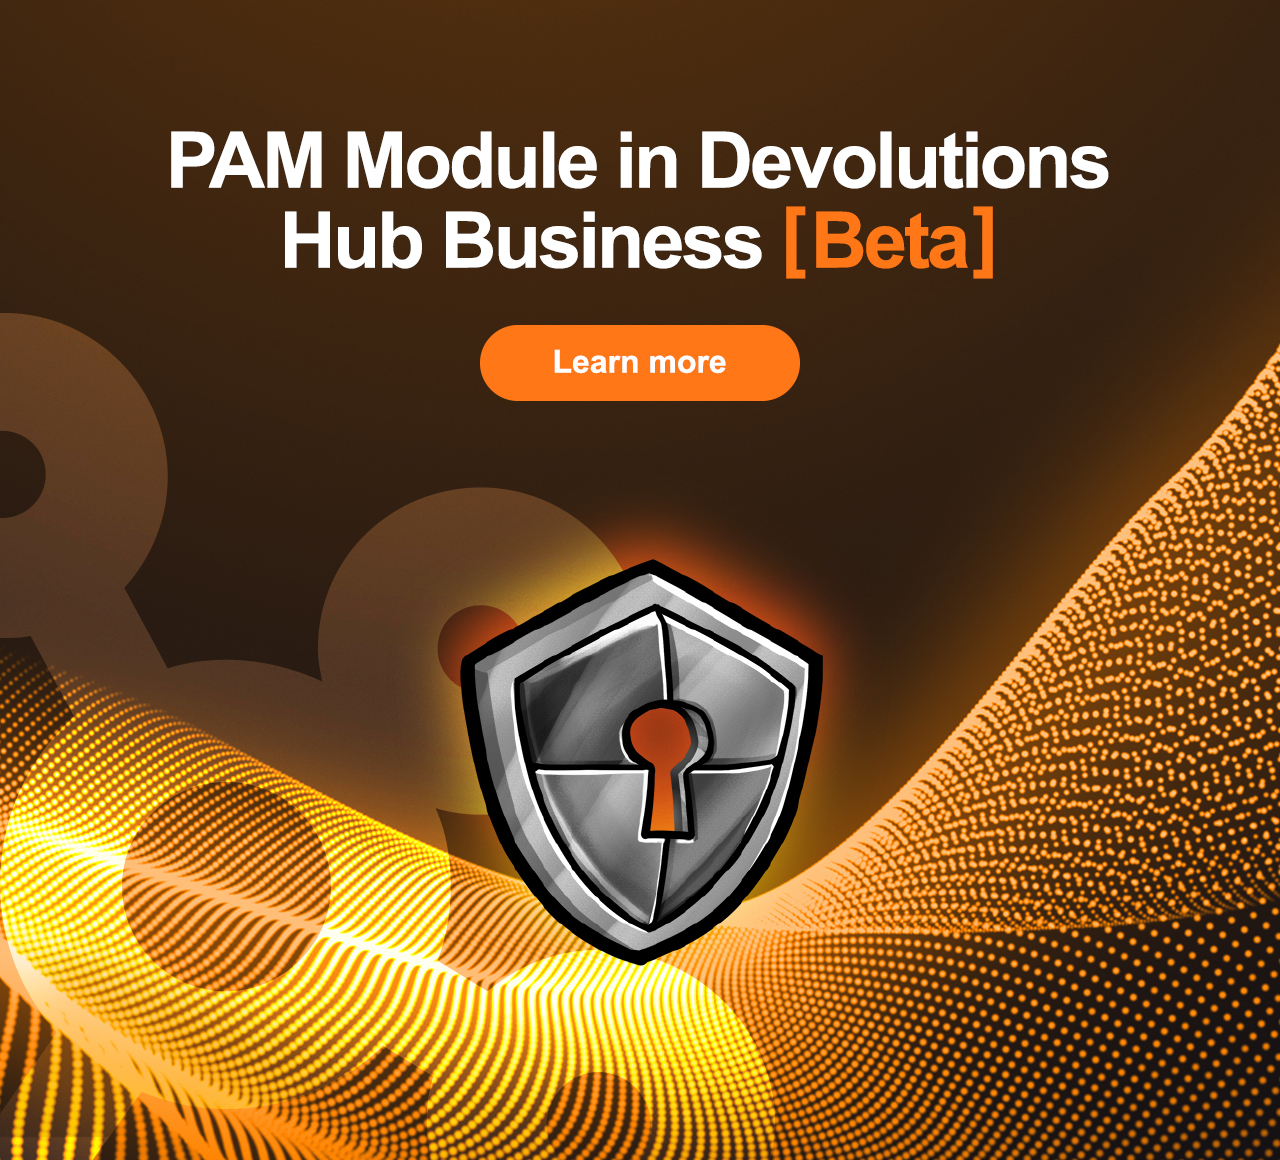 PAM Module in Devolutions Hub Business - Beta